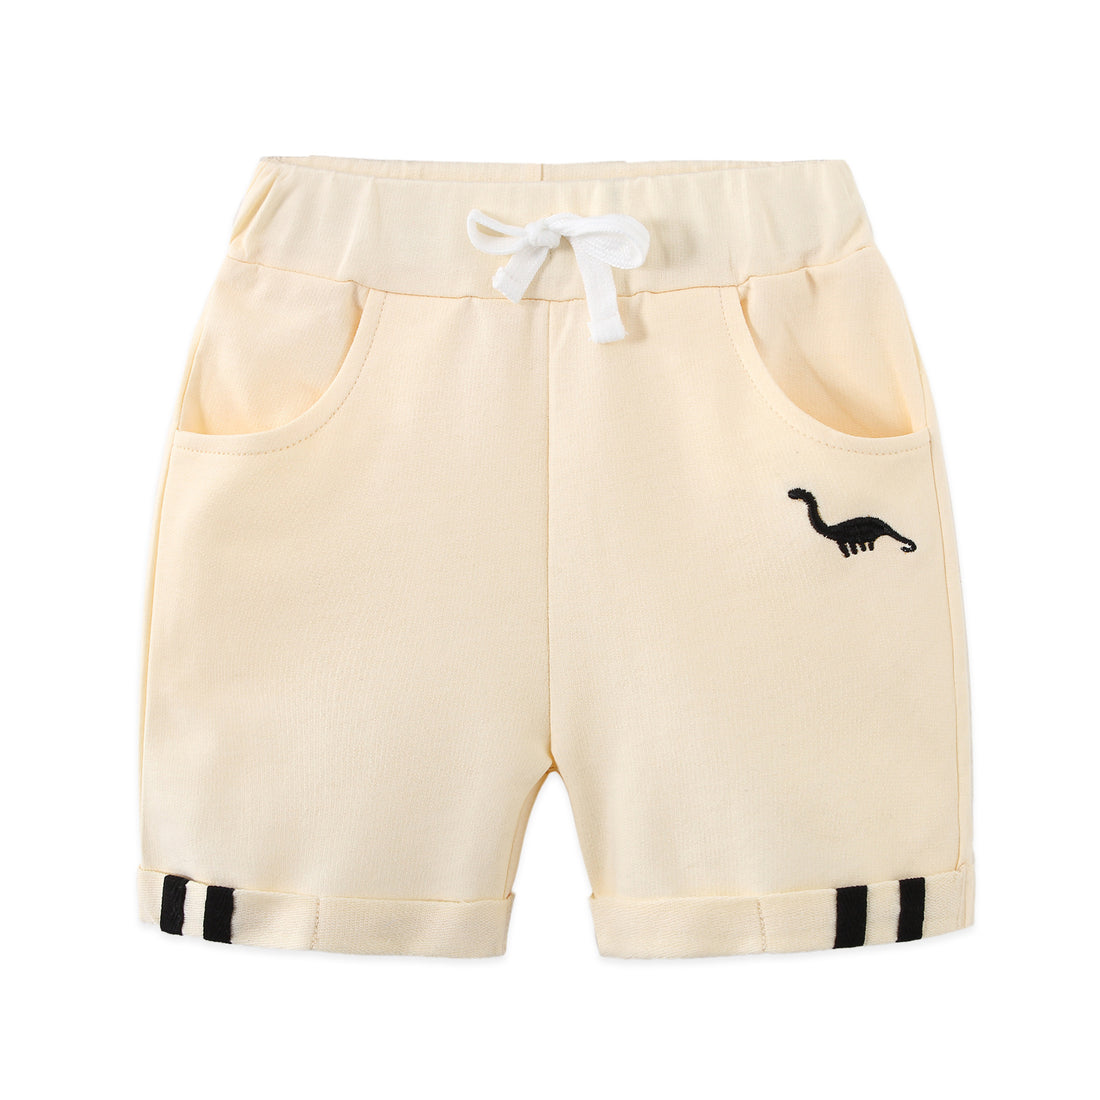 [119200-KHAKI] - Celana Pendek Training Anak Sporty - Motif Embroidery Animal